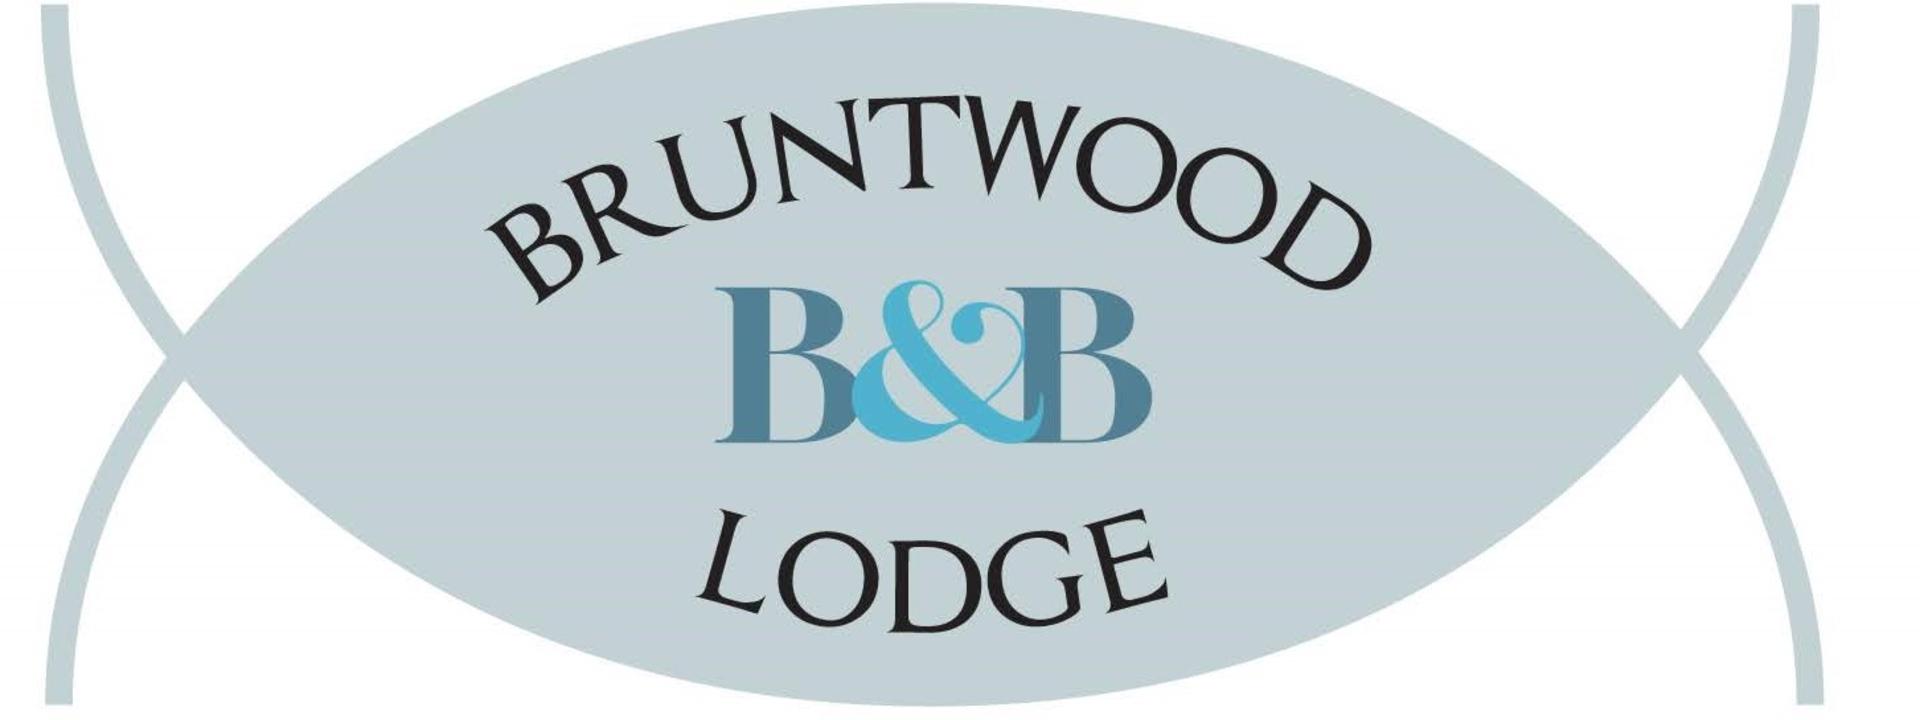 BruntwoodLodge_logo.jpg